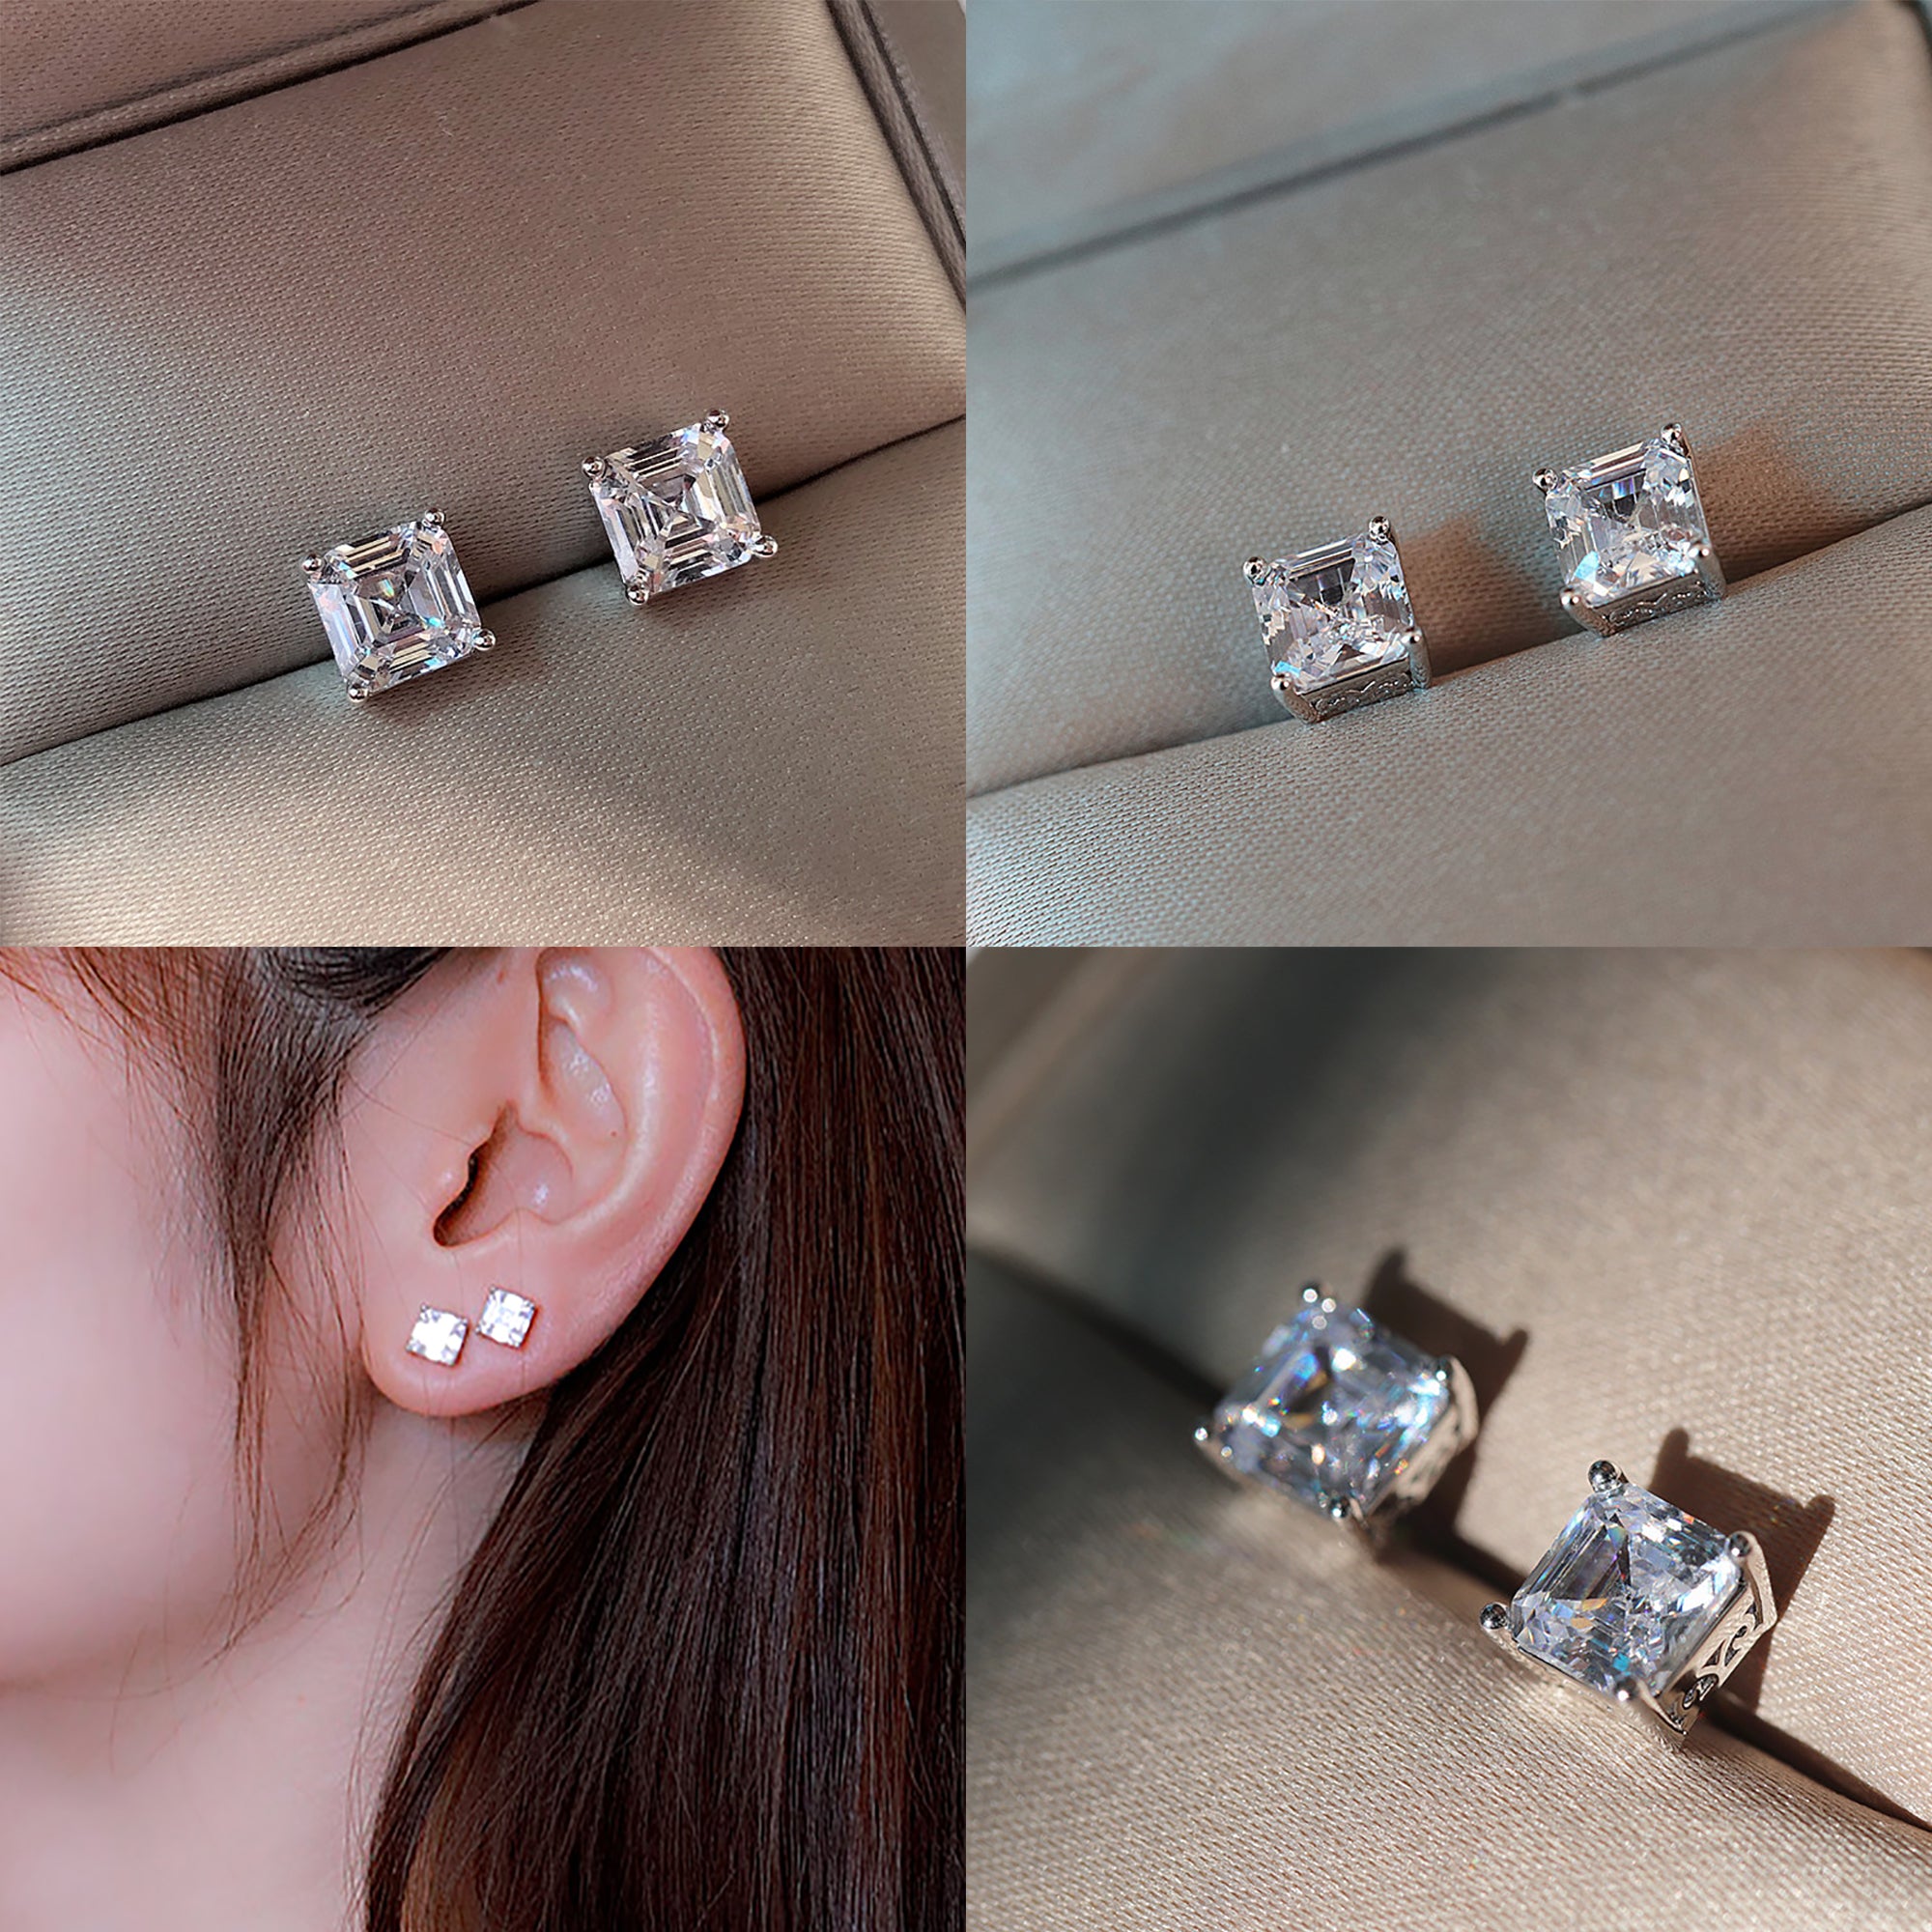 Princess Cut CZ Stud Earrings Adjustable gift valentine's Day Birthday anniversary KOL fashion